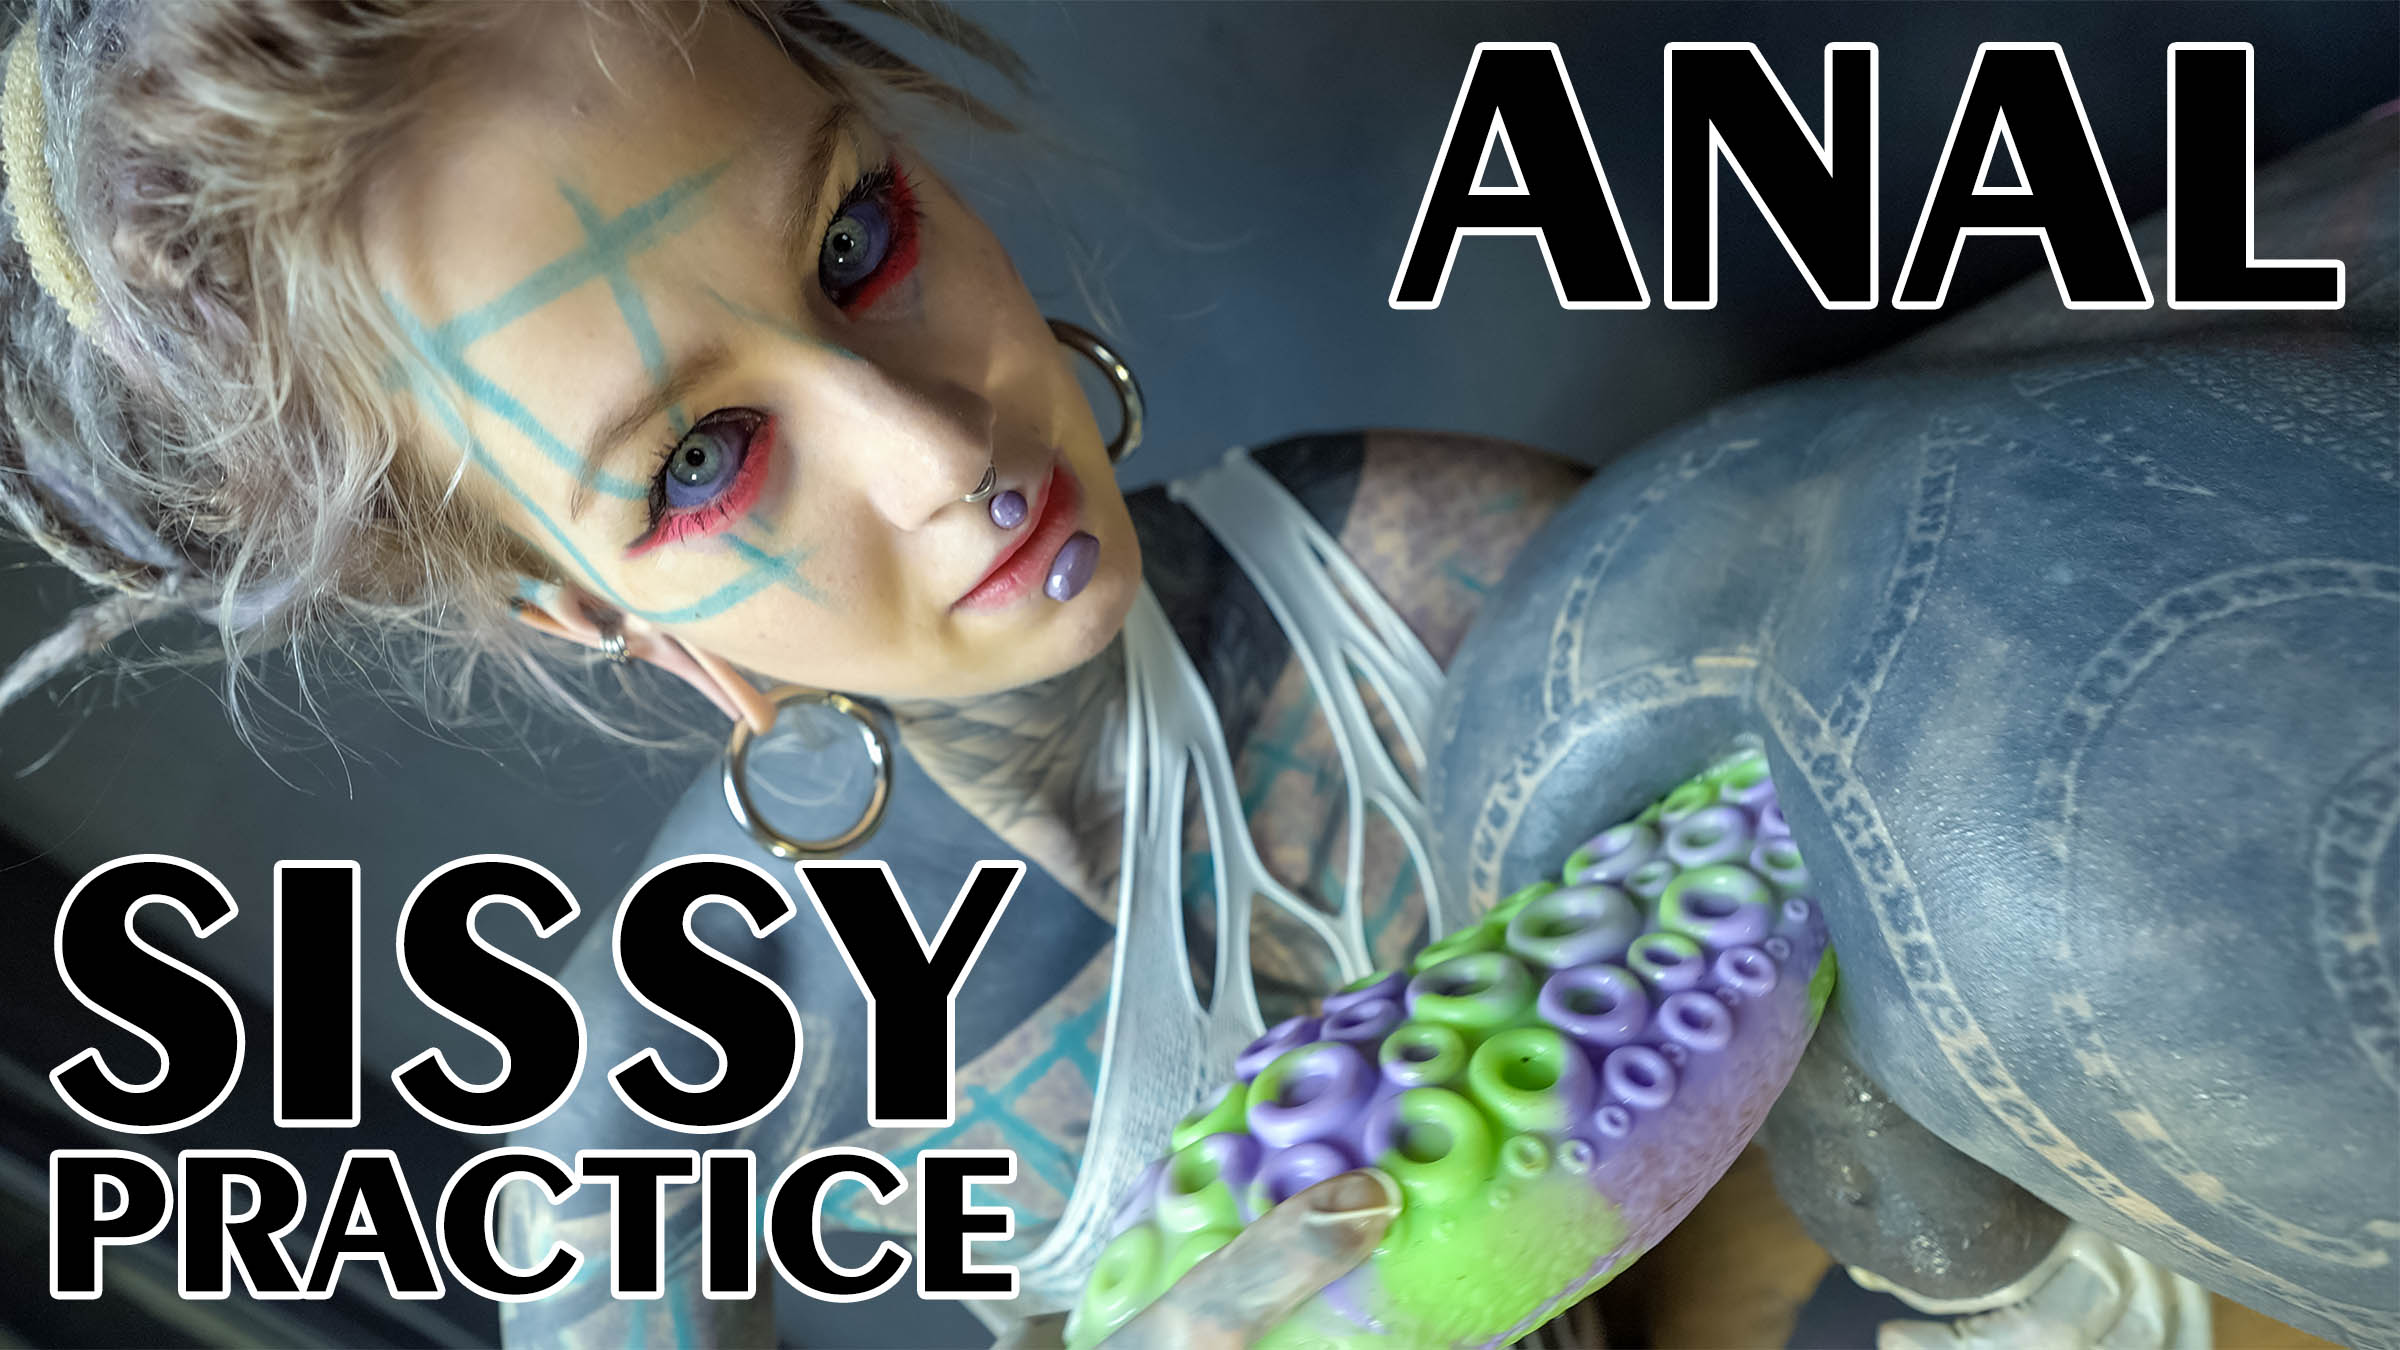 Anuskatzz Anal Sissy Practice Z-Filmz-Originals